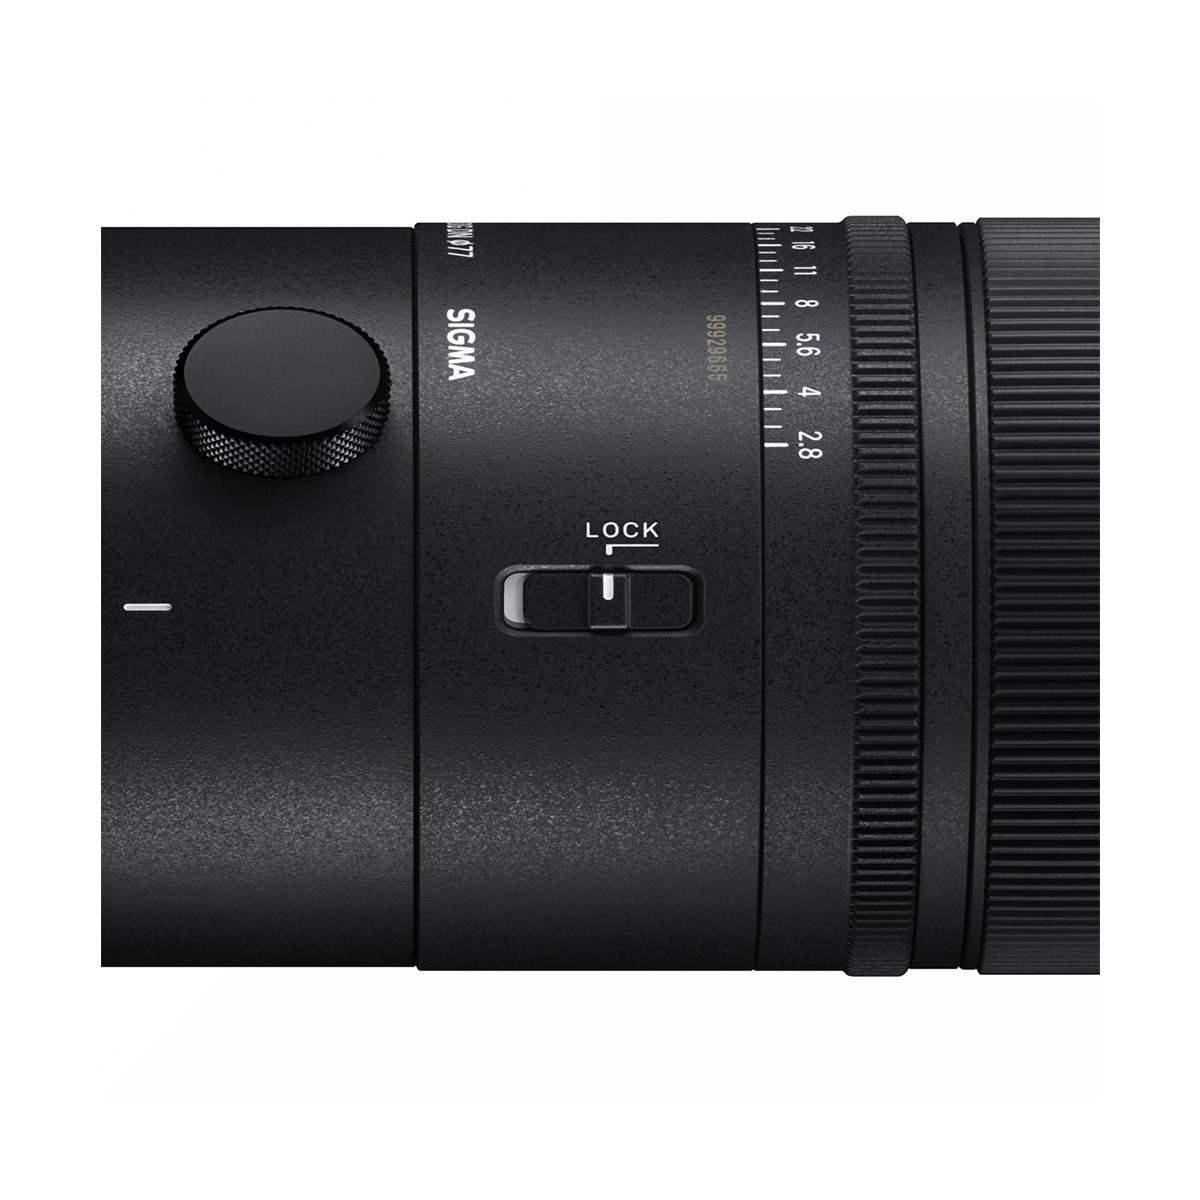 Sigma 70-200mm f/2.8 DG DN OS Sports Lens for Leica / Panasonic L-Mount